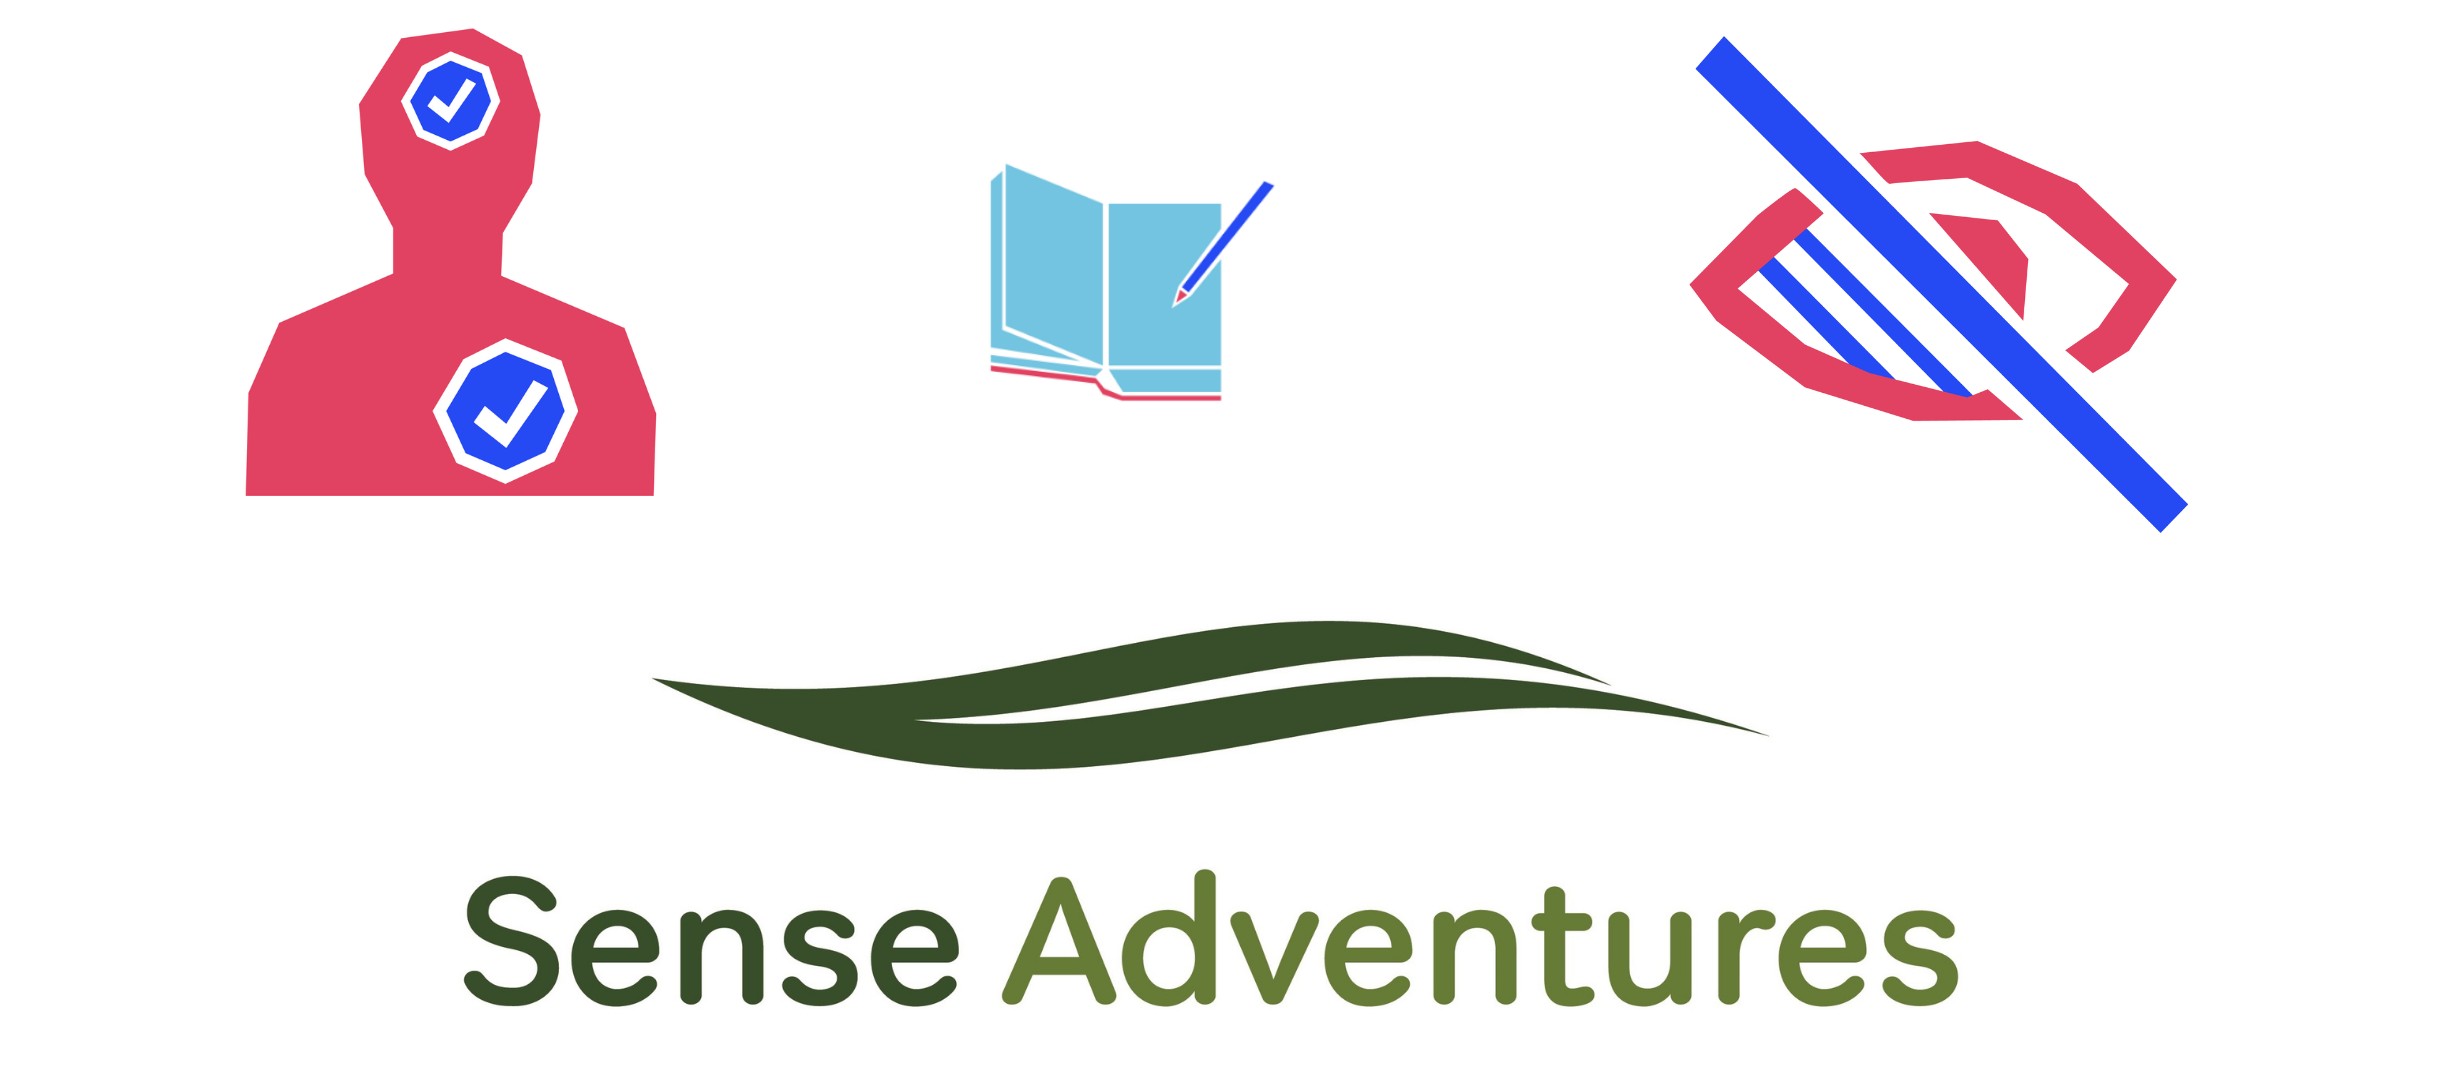 sense adventures banner